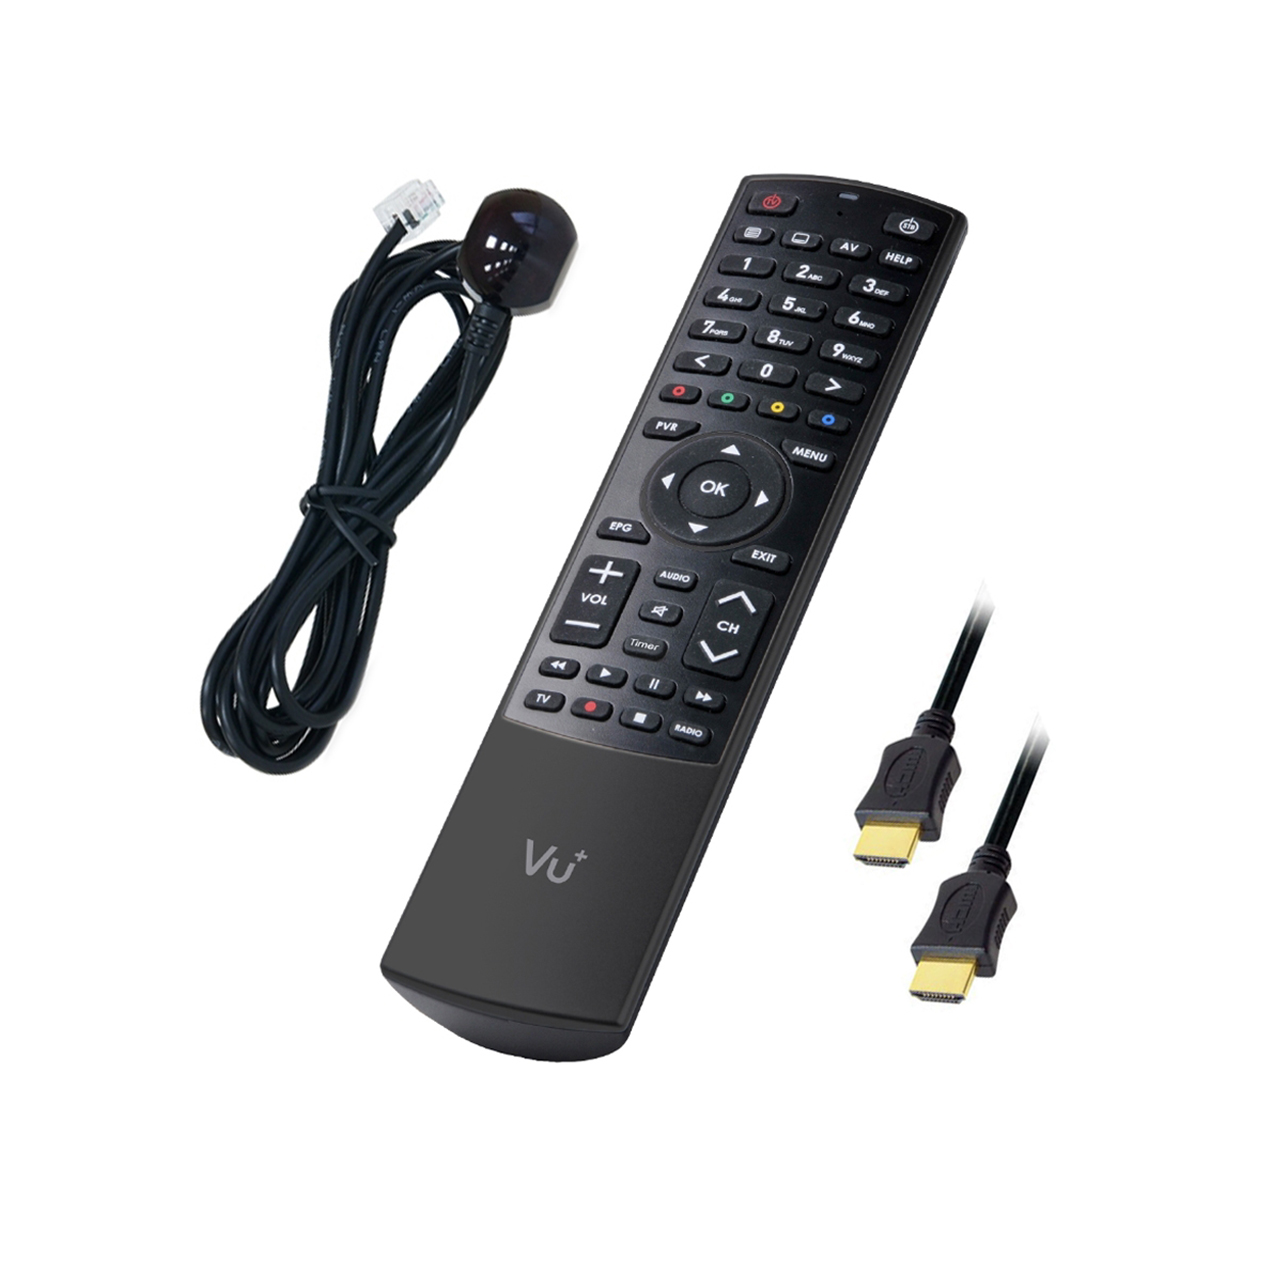 VU+ Zero 4K 1x DVB-S2 UHD Sat (Schwarz) HD Sat Stick H265 Tuner Receiver Receiver Wlan Linux